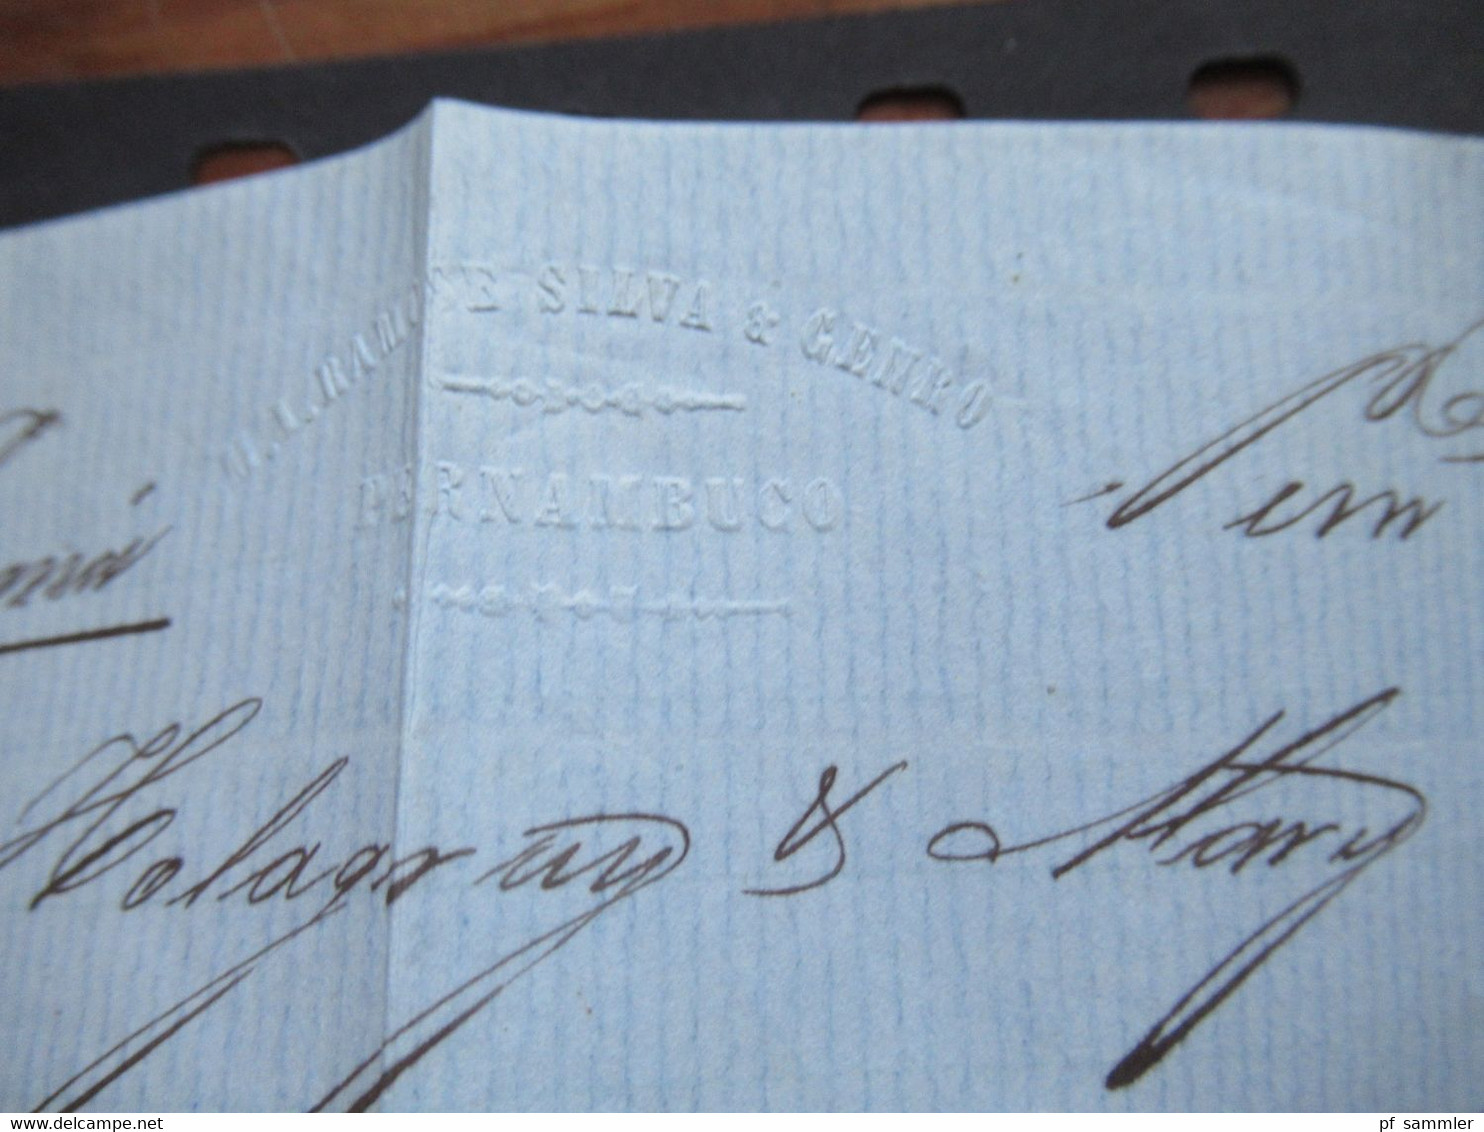 Brasilien Pernambuco 1865 Schiffspost über London nach Bordeaux handschriftl. Parana Stp. GB 1F 60C rückseitig 6 Stempel